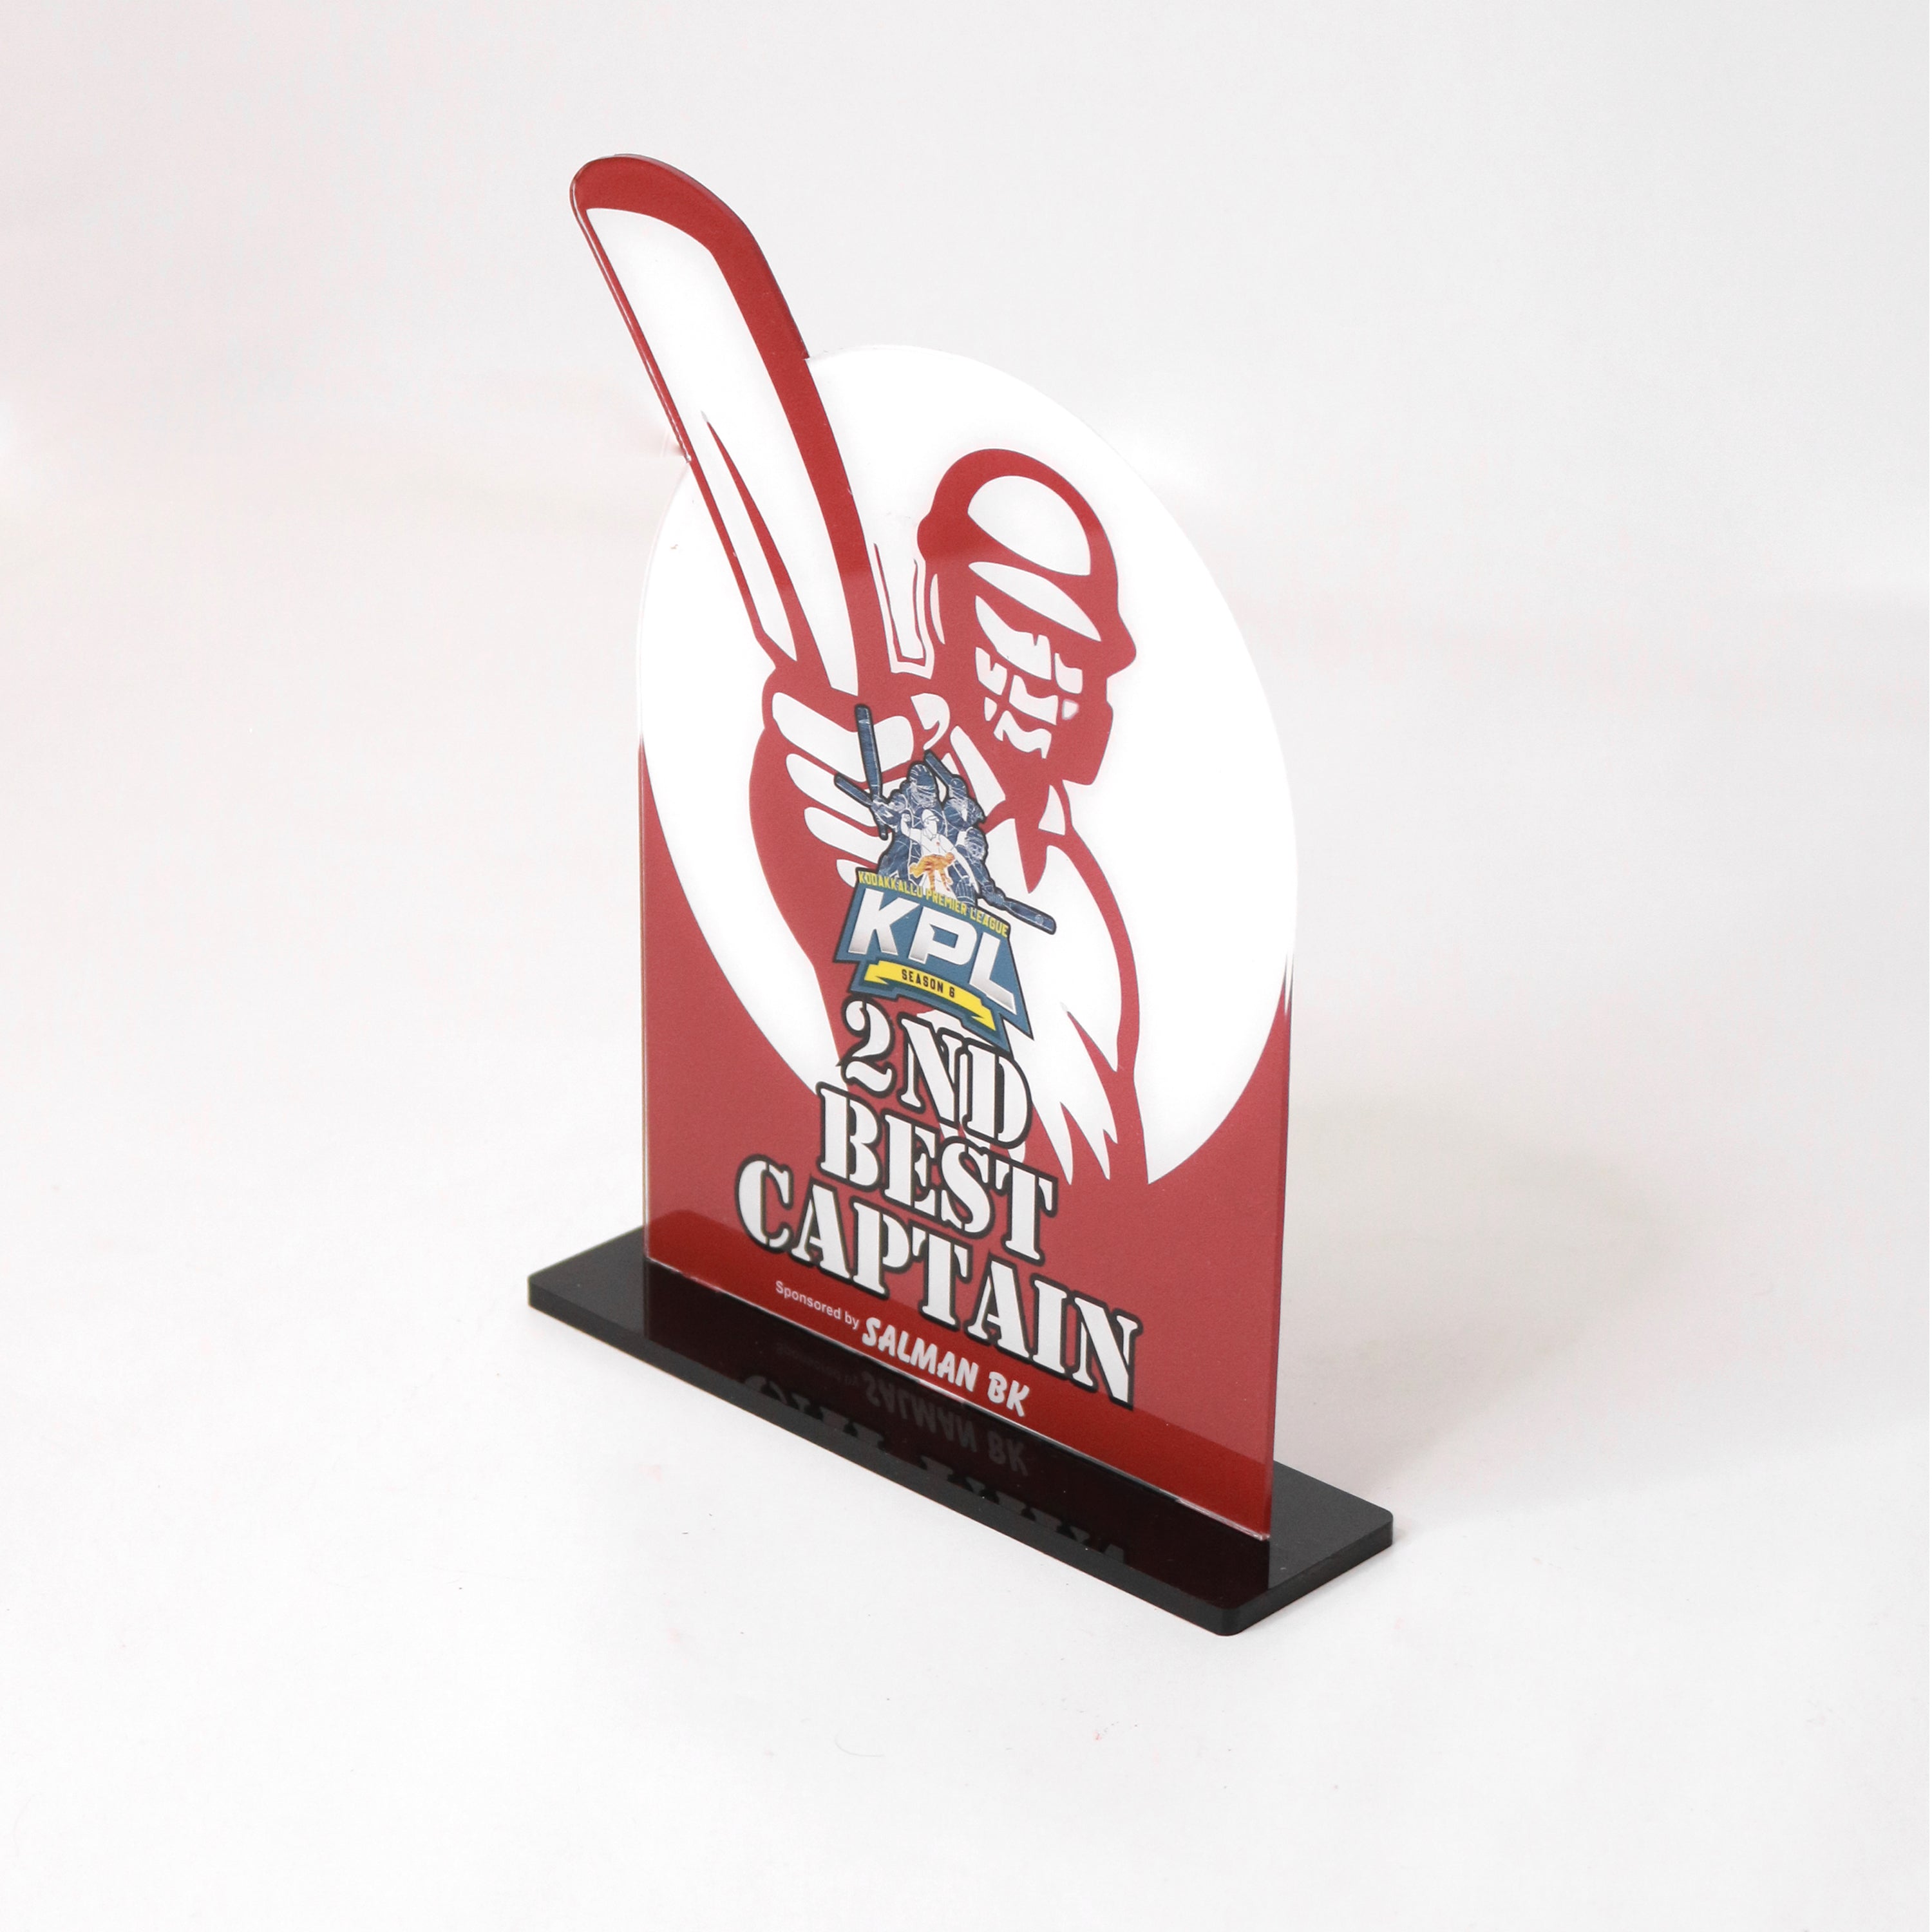 Second Best Captain Cricket Mementos - Orbiz Creativez